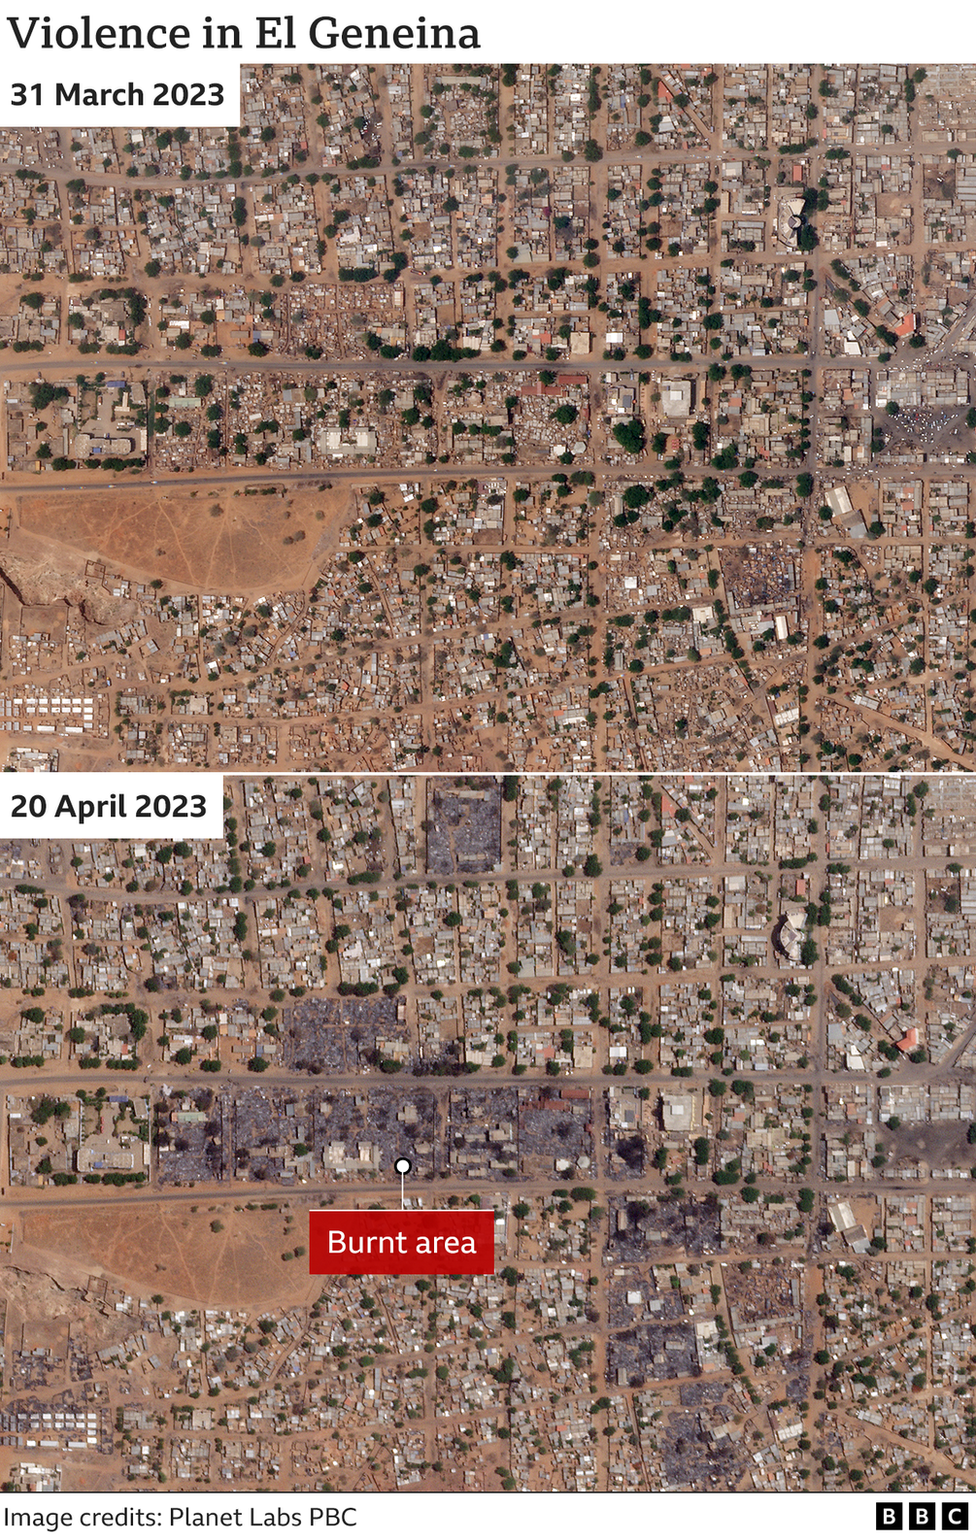 Satellite images show areas hit bit violence in Darfur's El Geneina